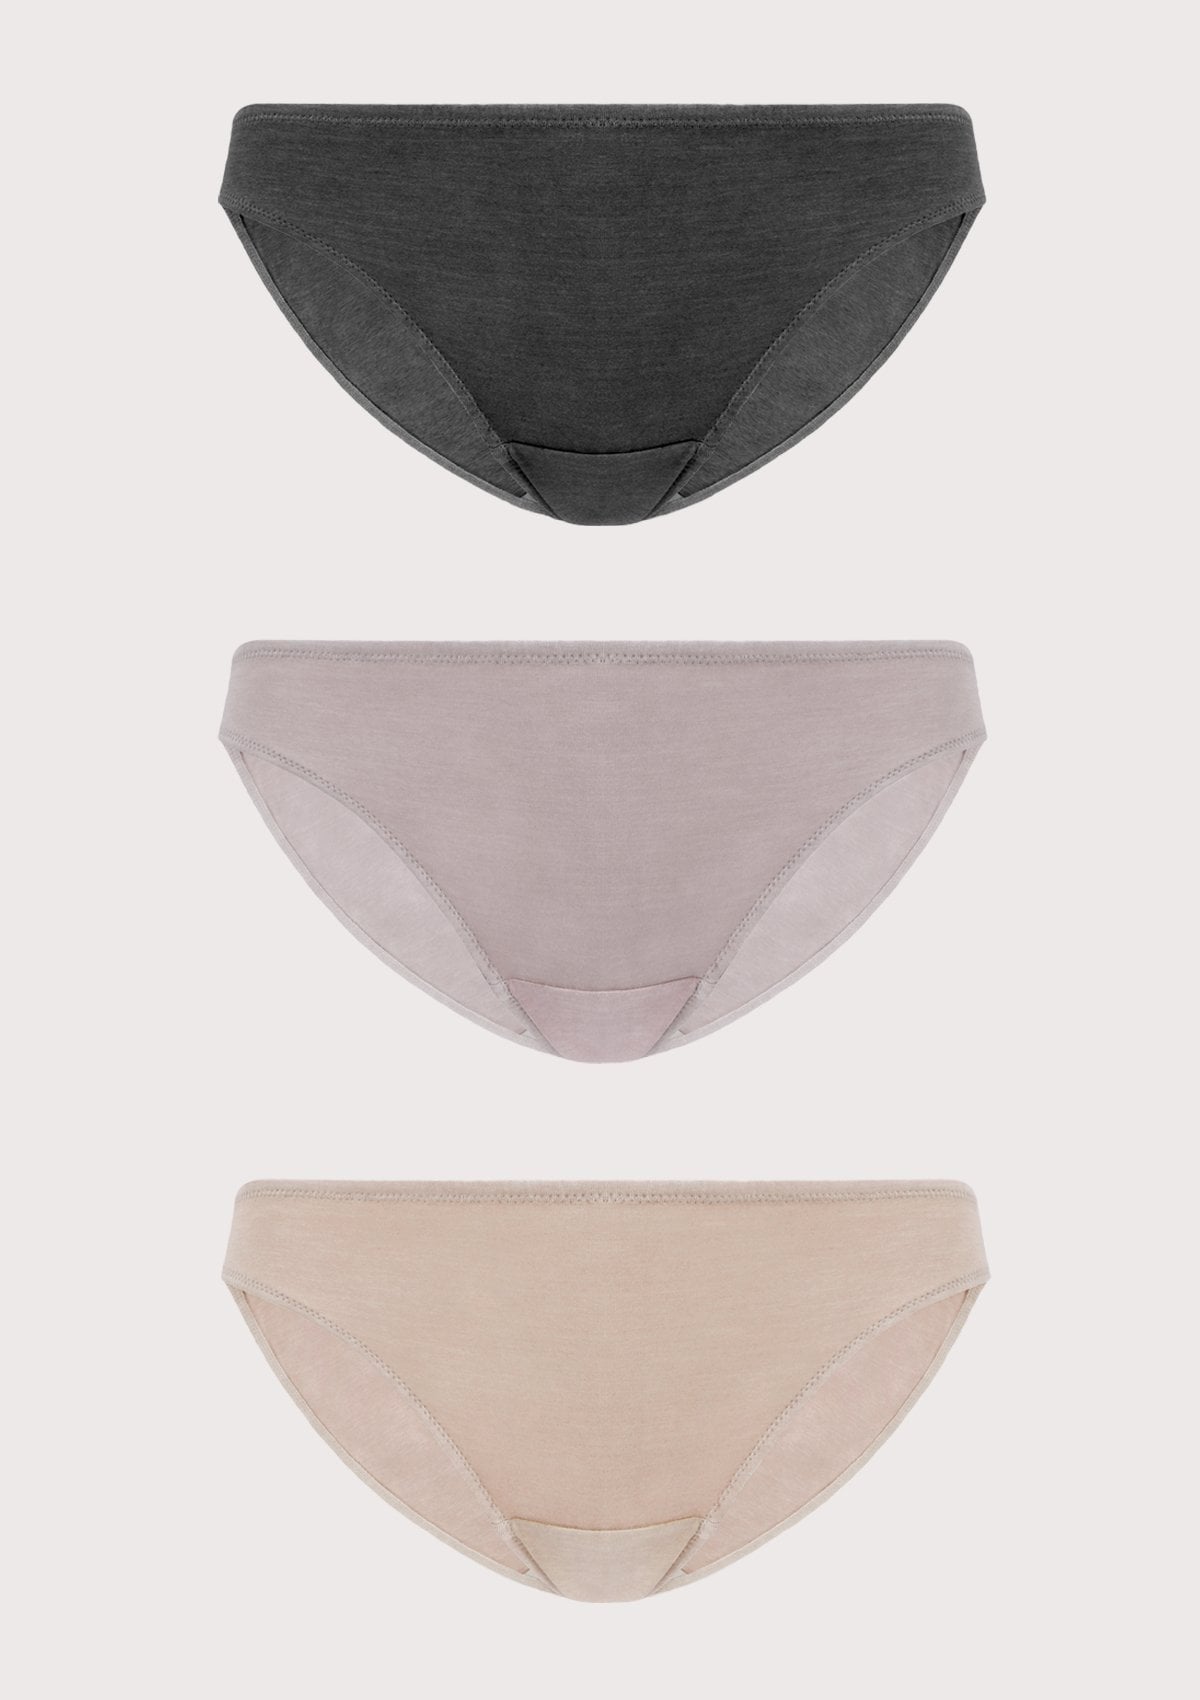 HSIA Comfort Cotton Mid-rise Bikini Panties 3 Pack - XL / Black+Pink+Beige